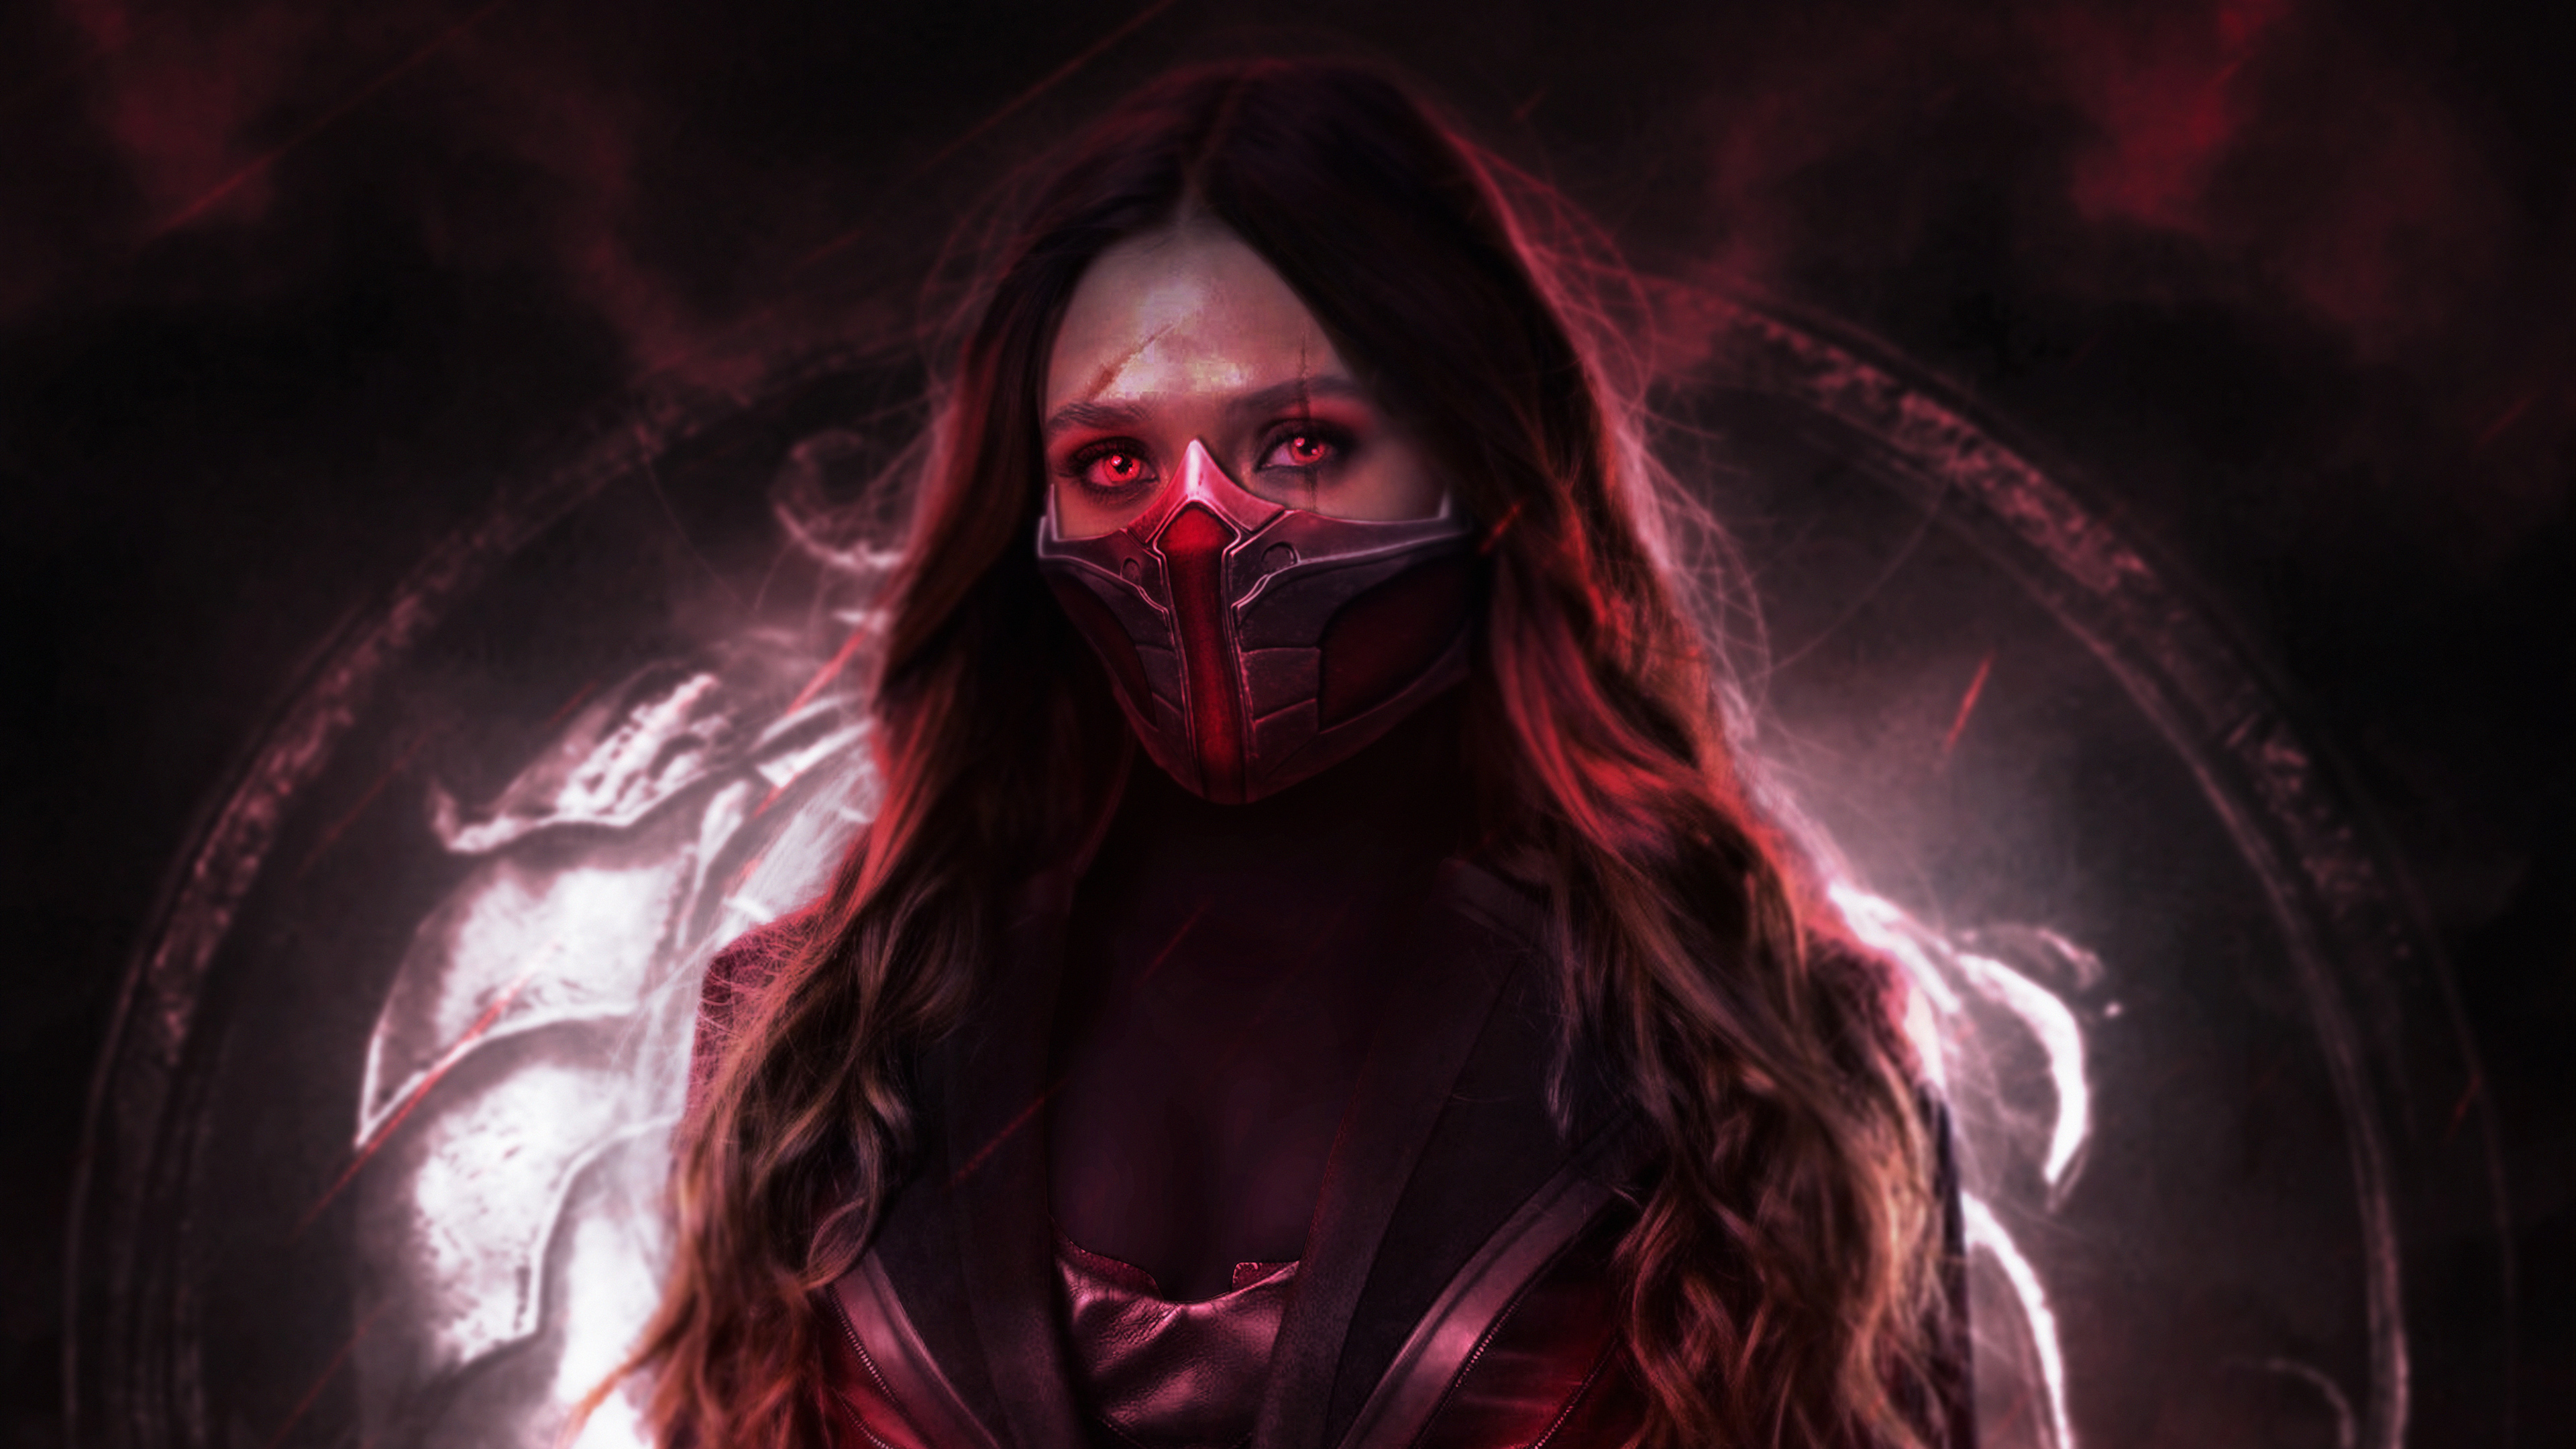 Digital Digital Art Artwork Skarlet Women Fantasy Girl Adobe Photoshop Retouching Red Mask Face Mask 3840x2160